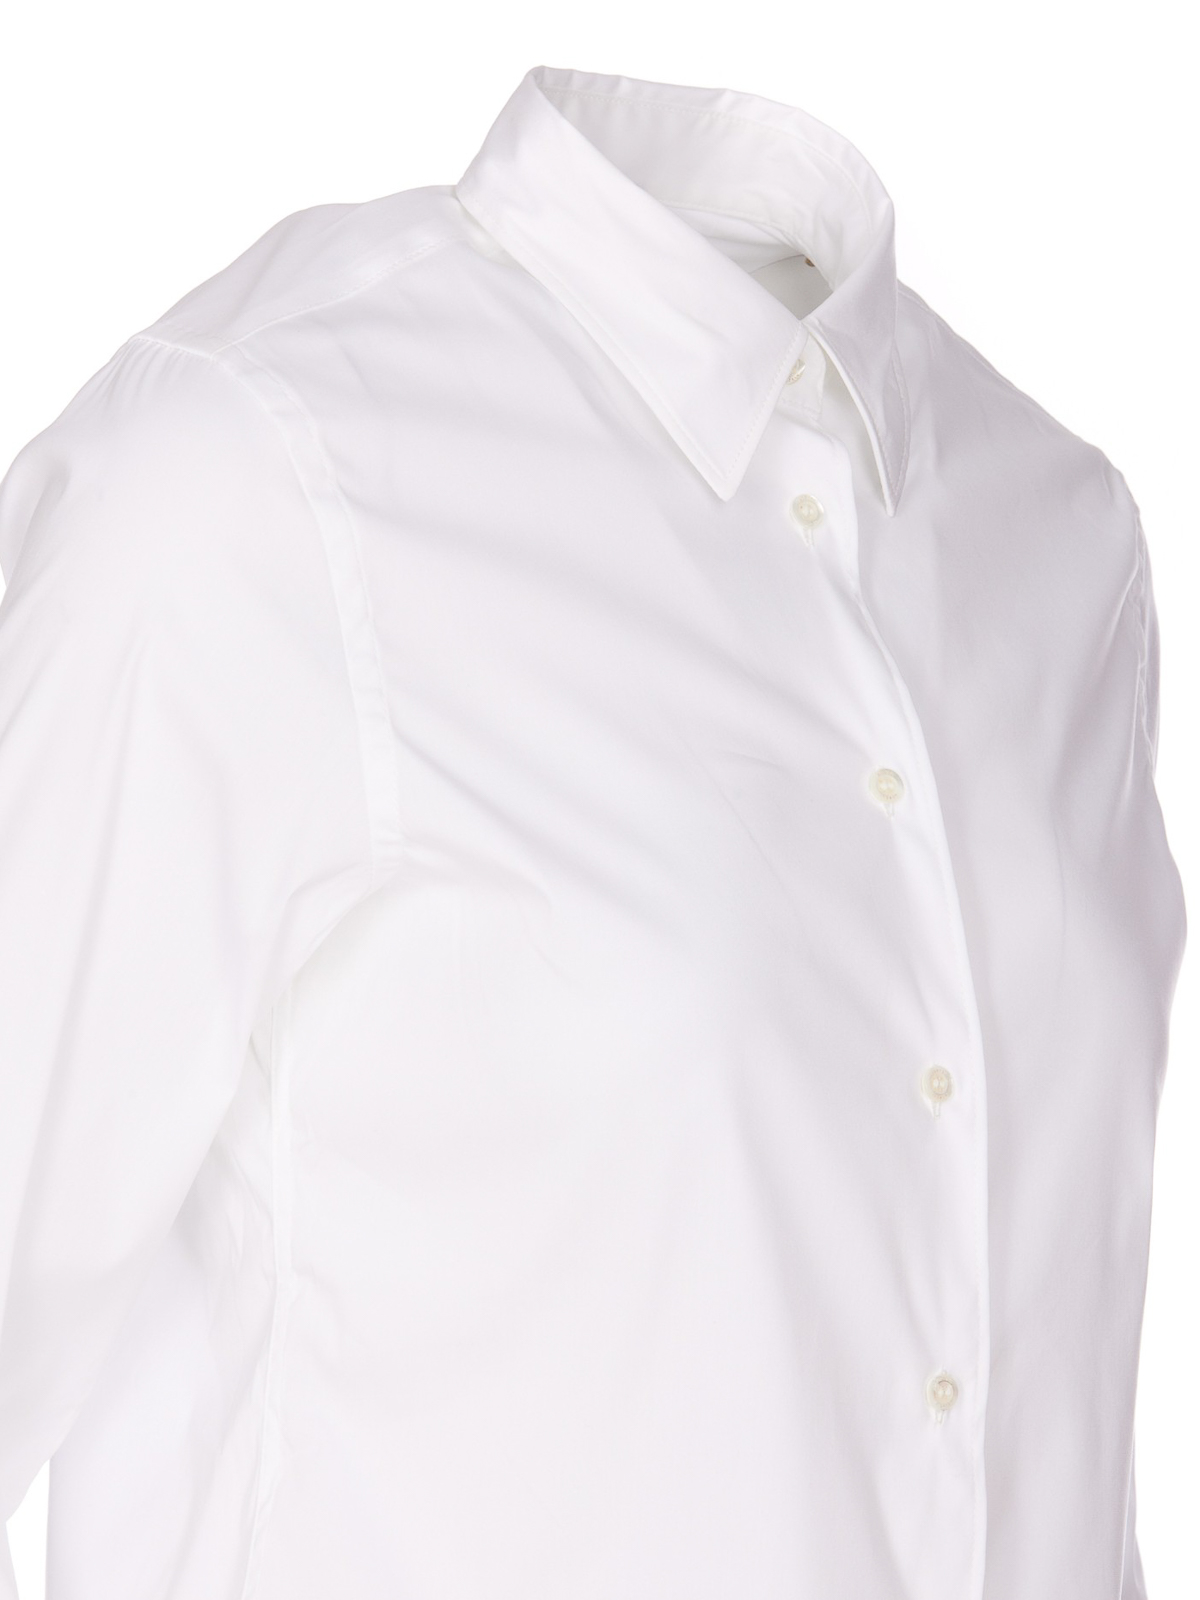 Shop Aspesi Stretch Cotton Shirt In Blanco